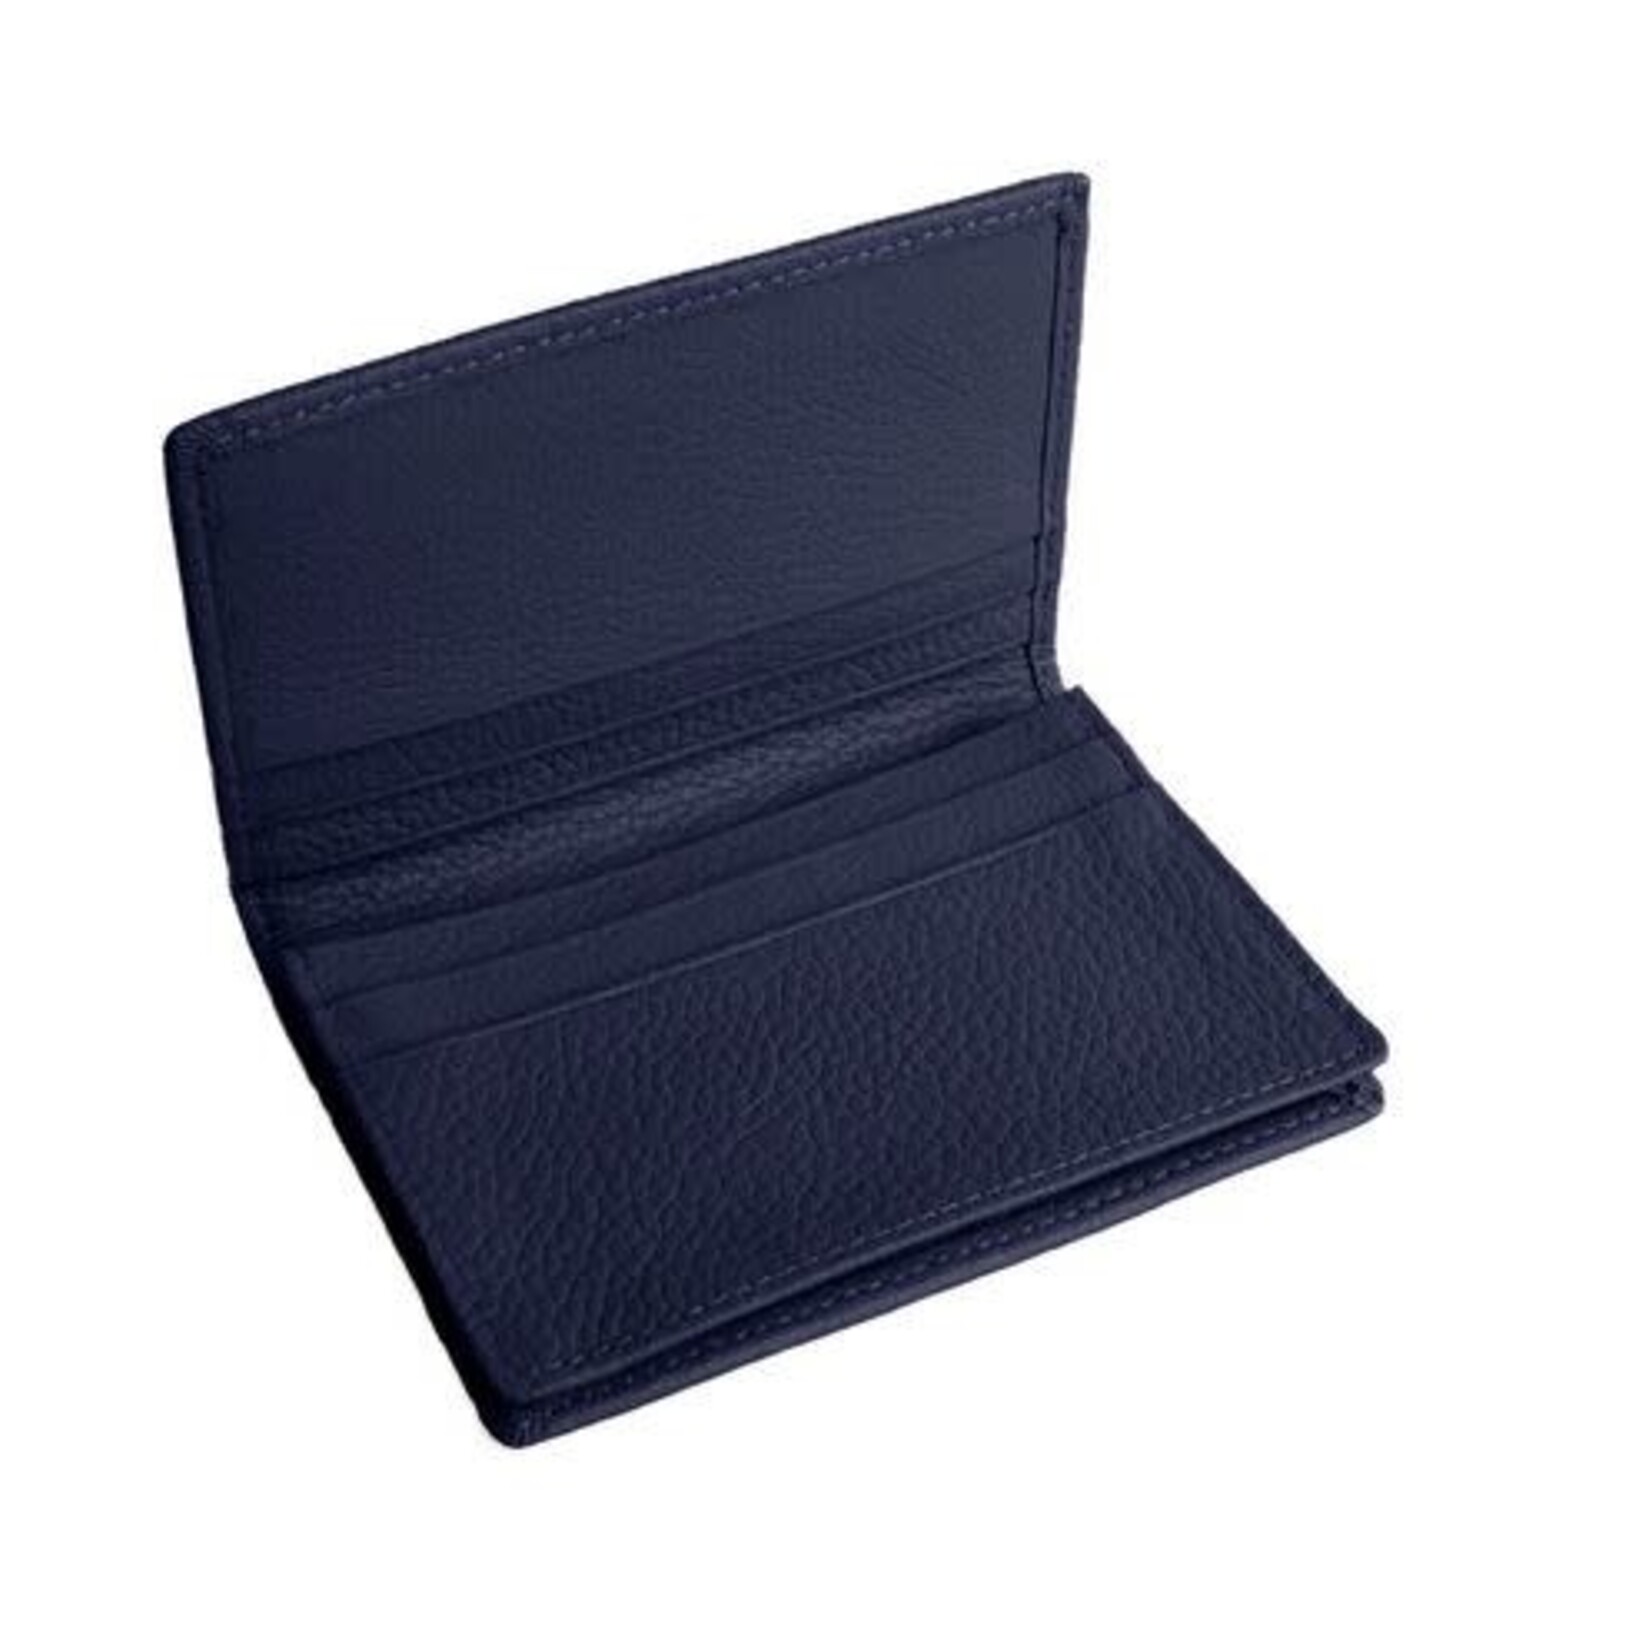 Brouk & Co Brouk Standford Card Case - navy blue